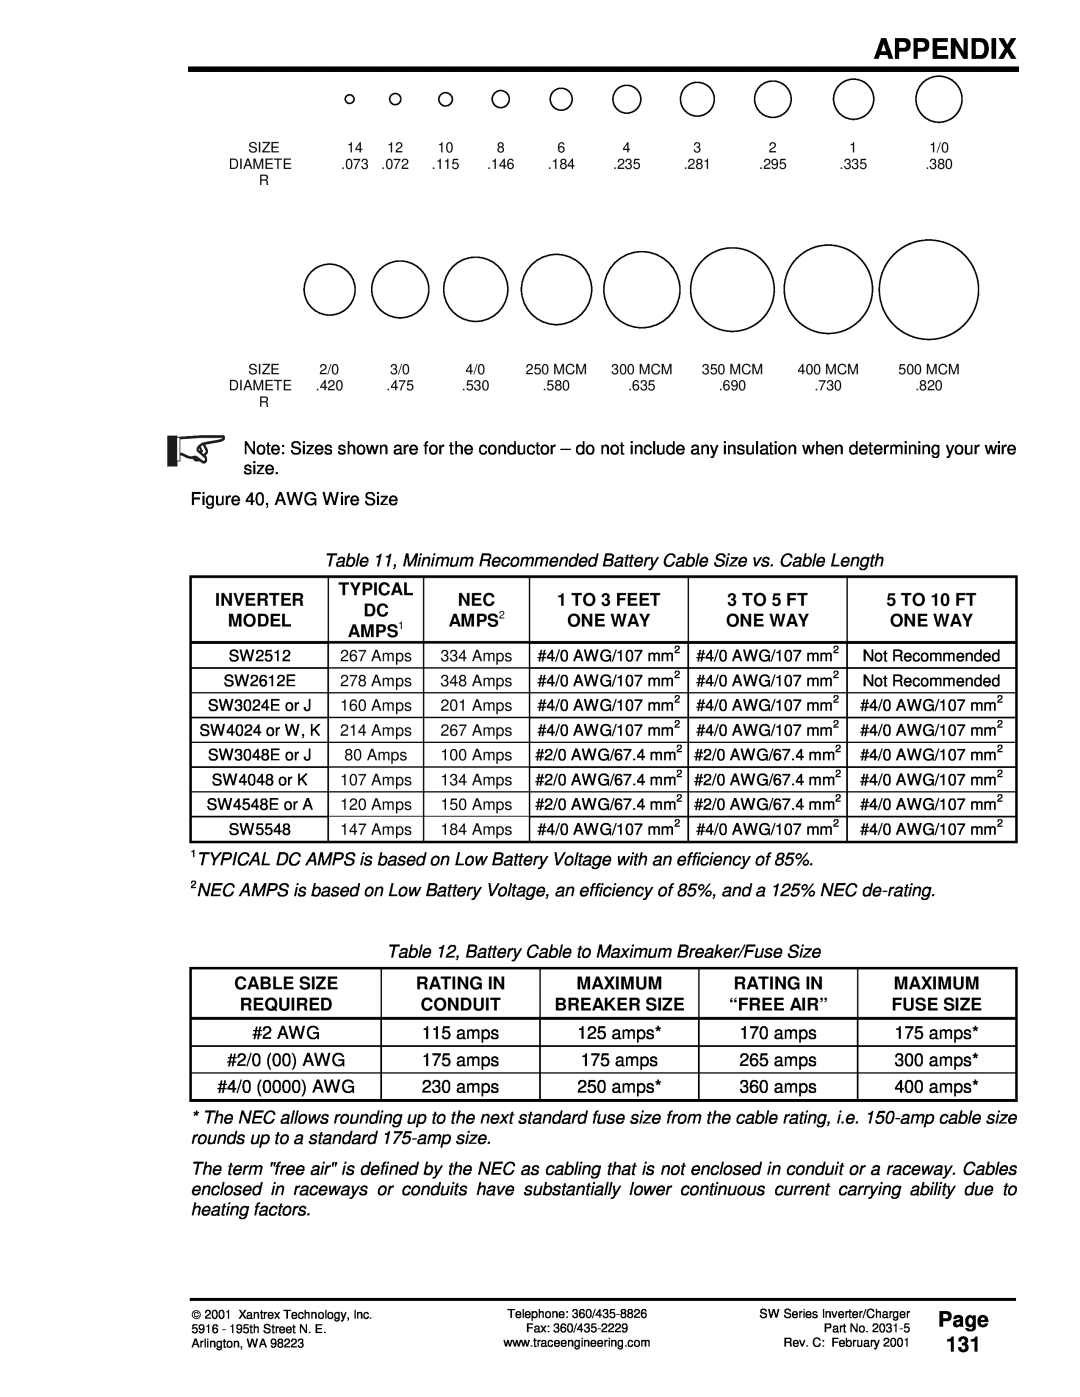 Xantrex Technology 120 VAC/60 Page 131, Minimum Recommended Battery Cable Size vs. Cable Length, NEC AMPS2, Appendix 